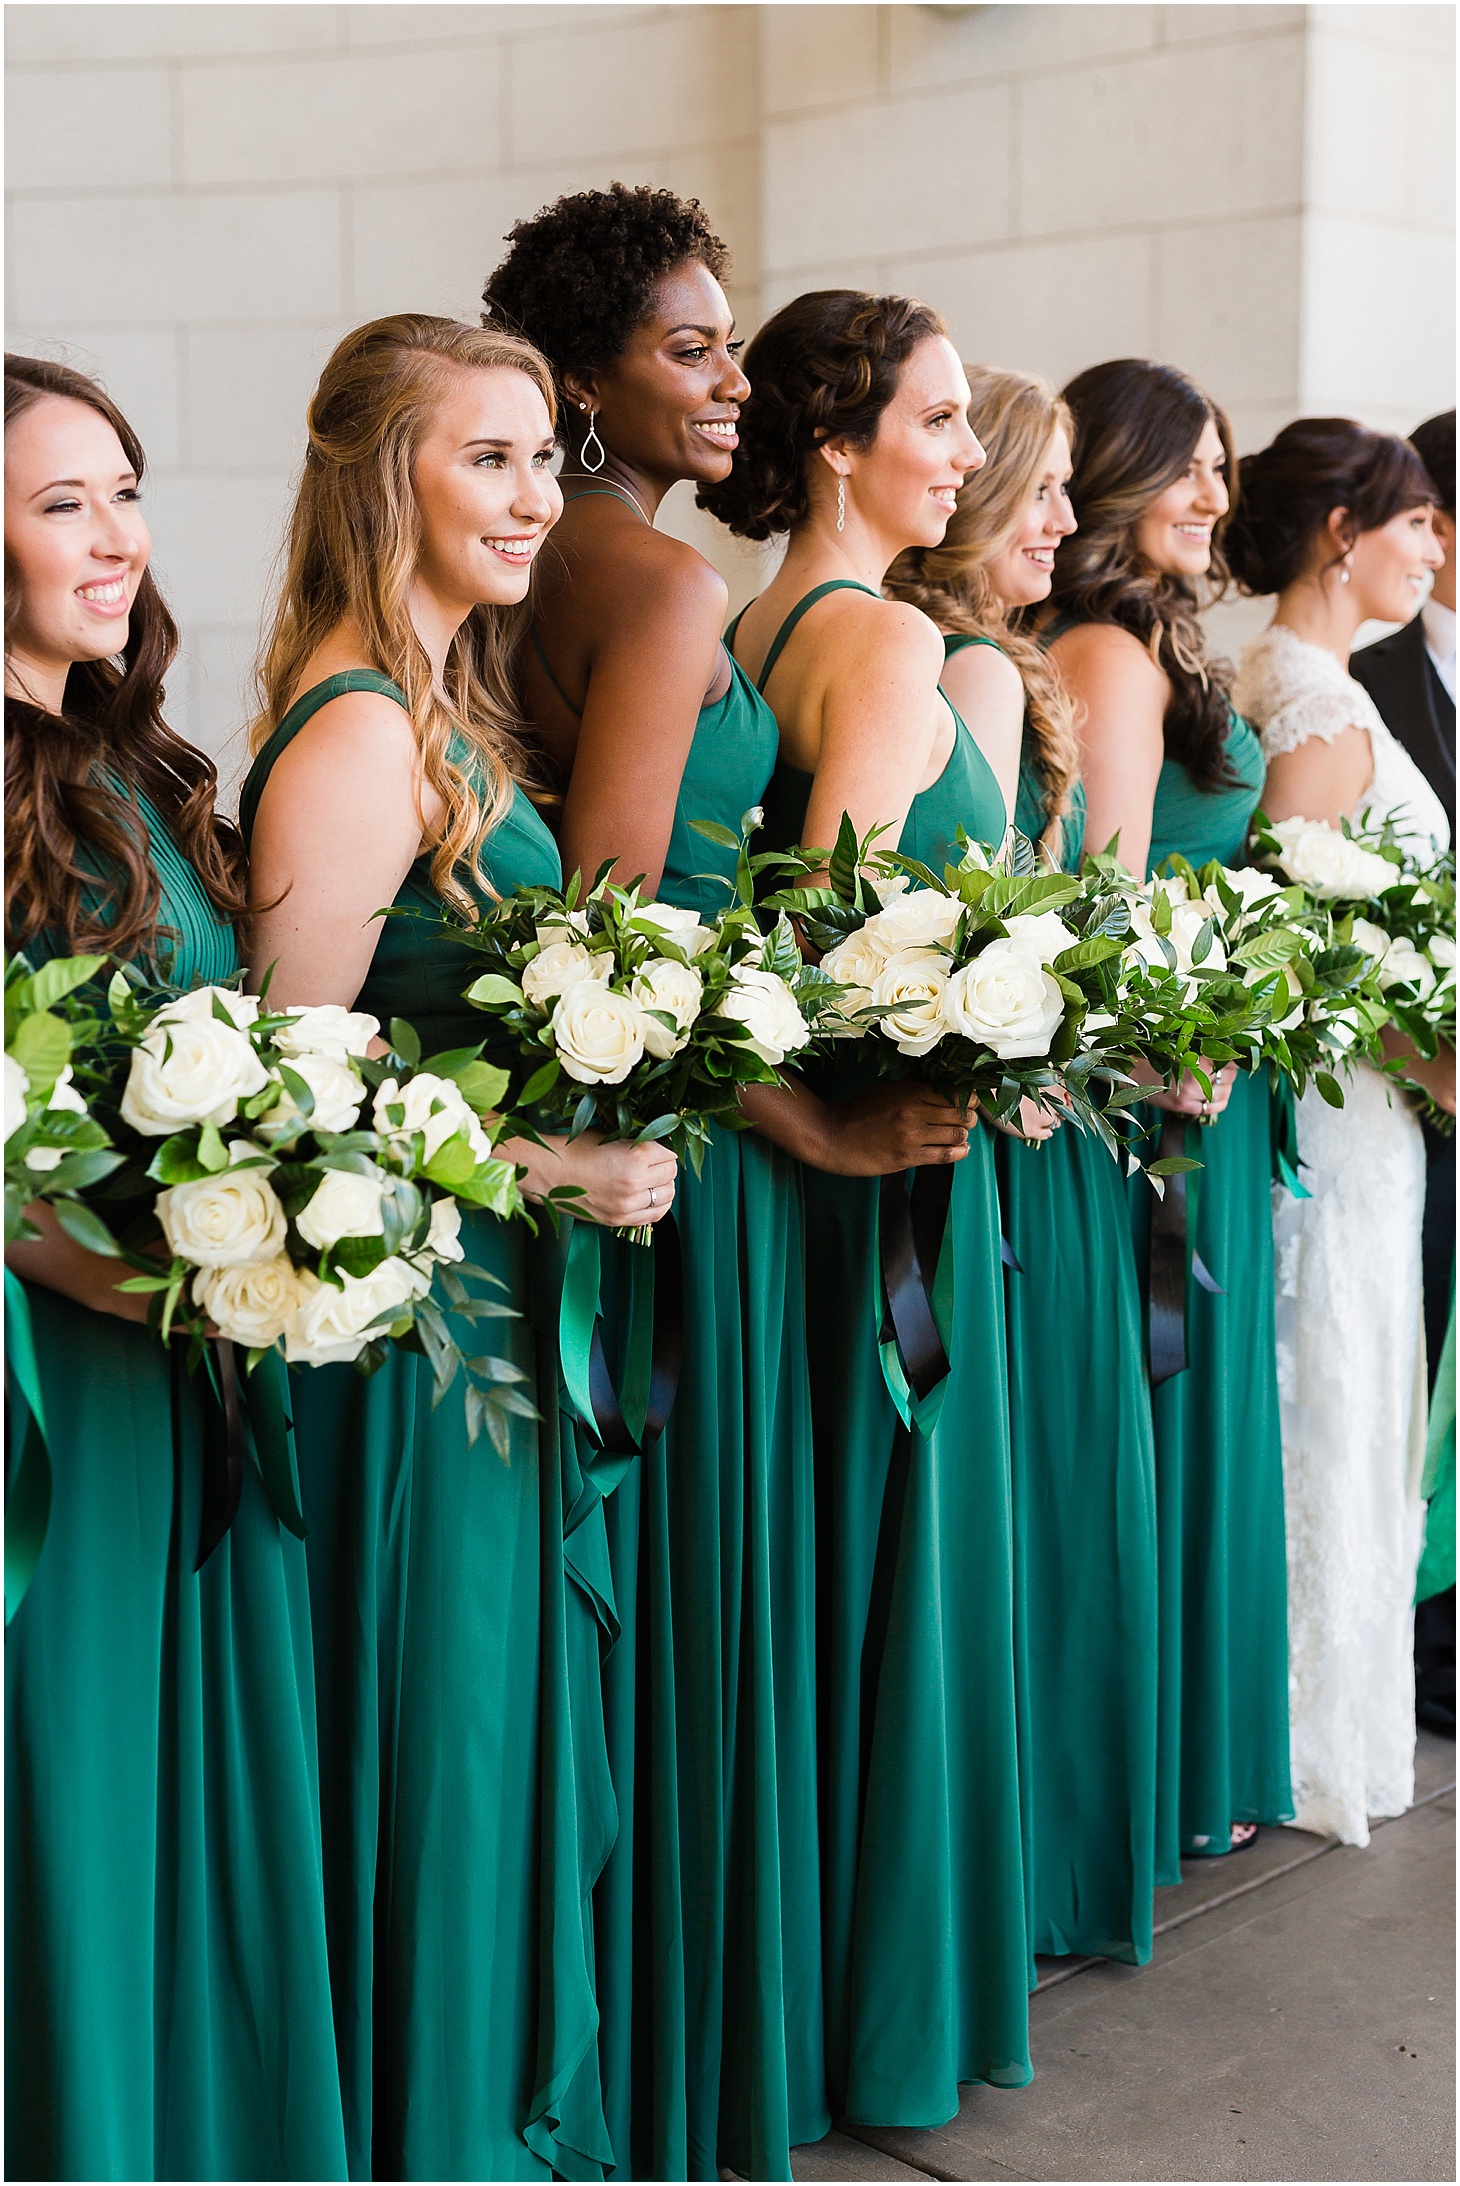 Bridal Party at Union Station, Azazie Bridesmaid Dresses, Hexagon-Inspired Emerald Wedding at Union Station in Washington DC, Sarah Bradshaw Photography